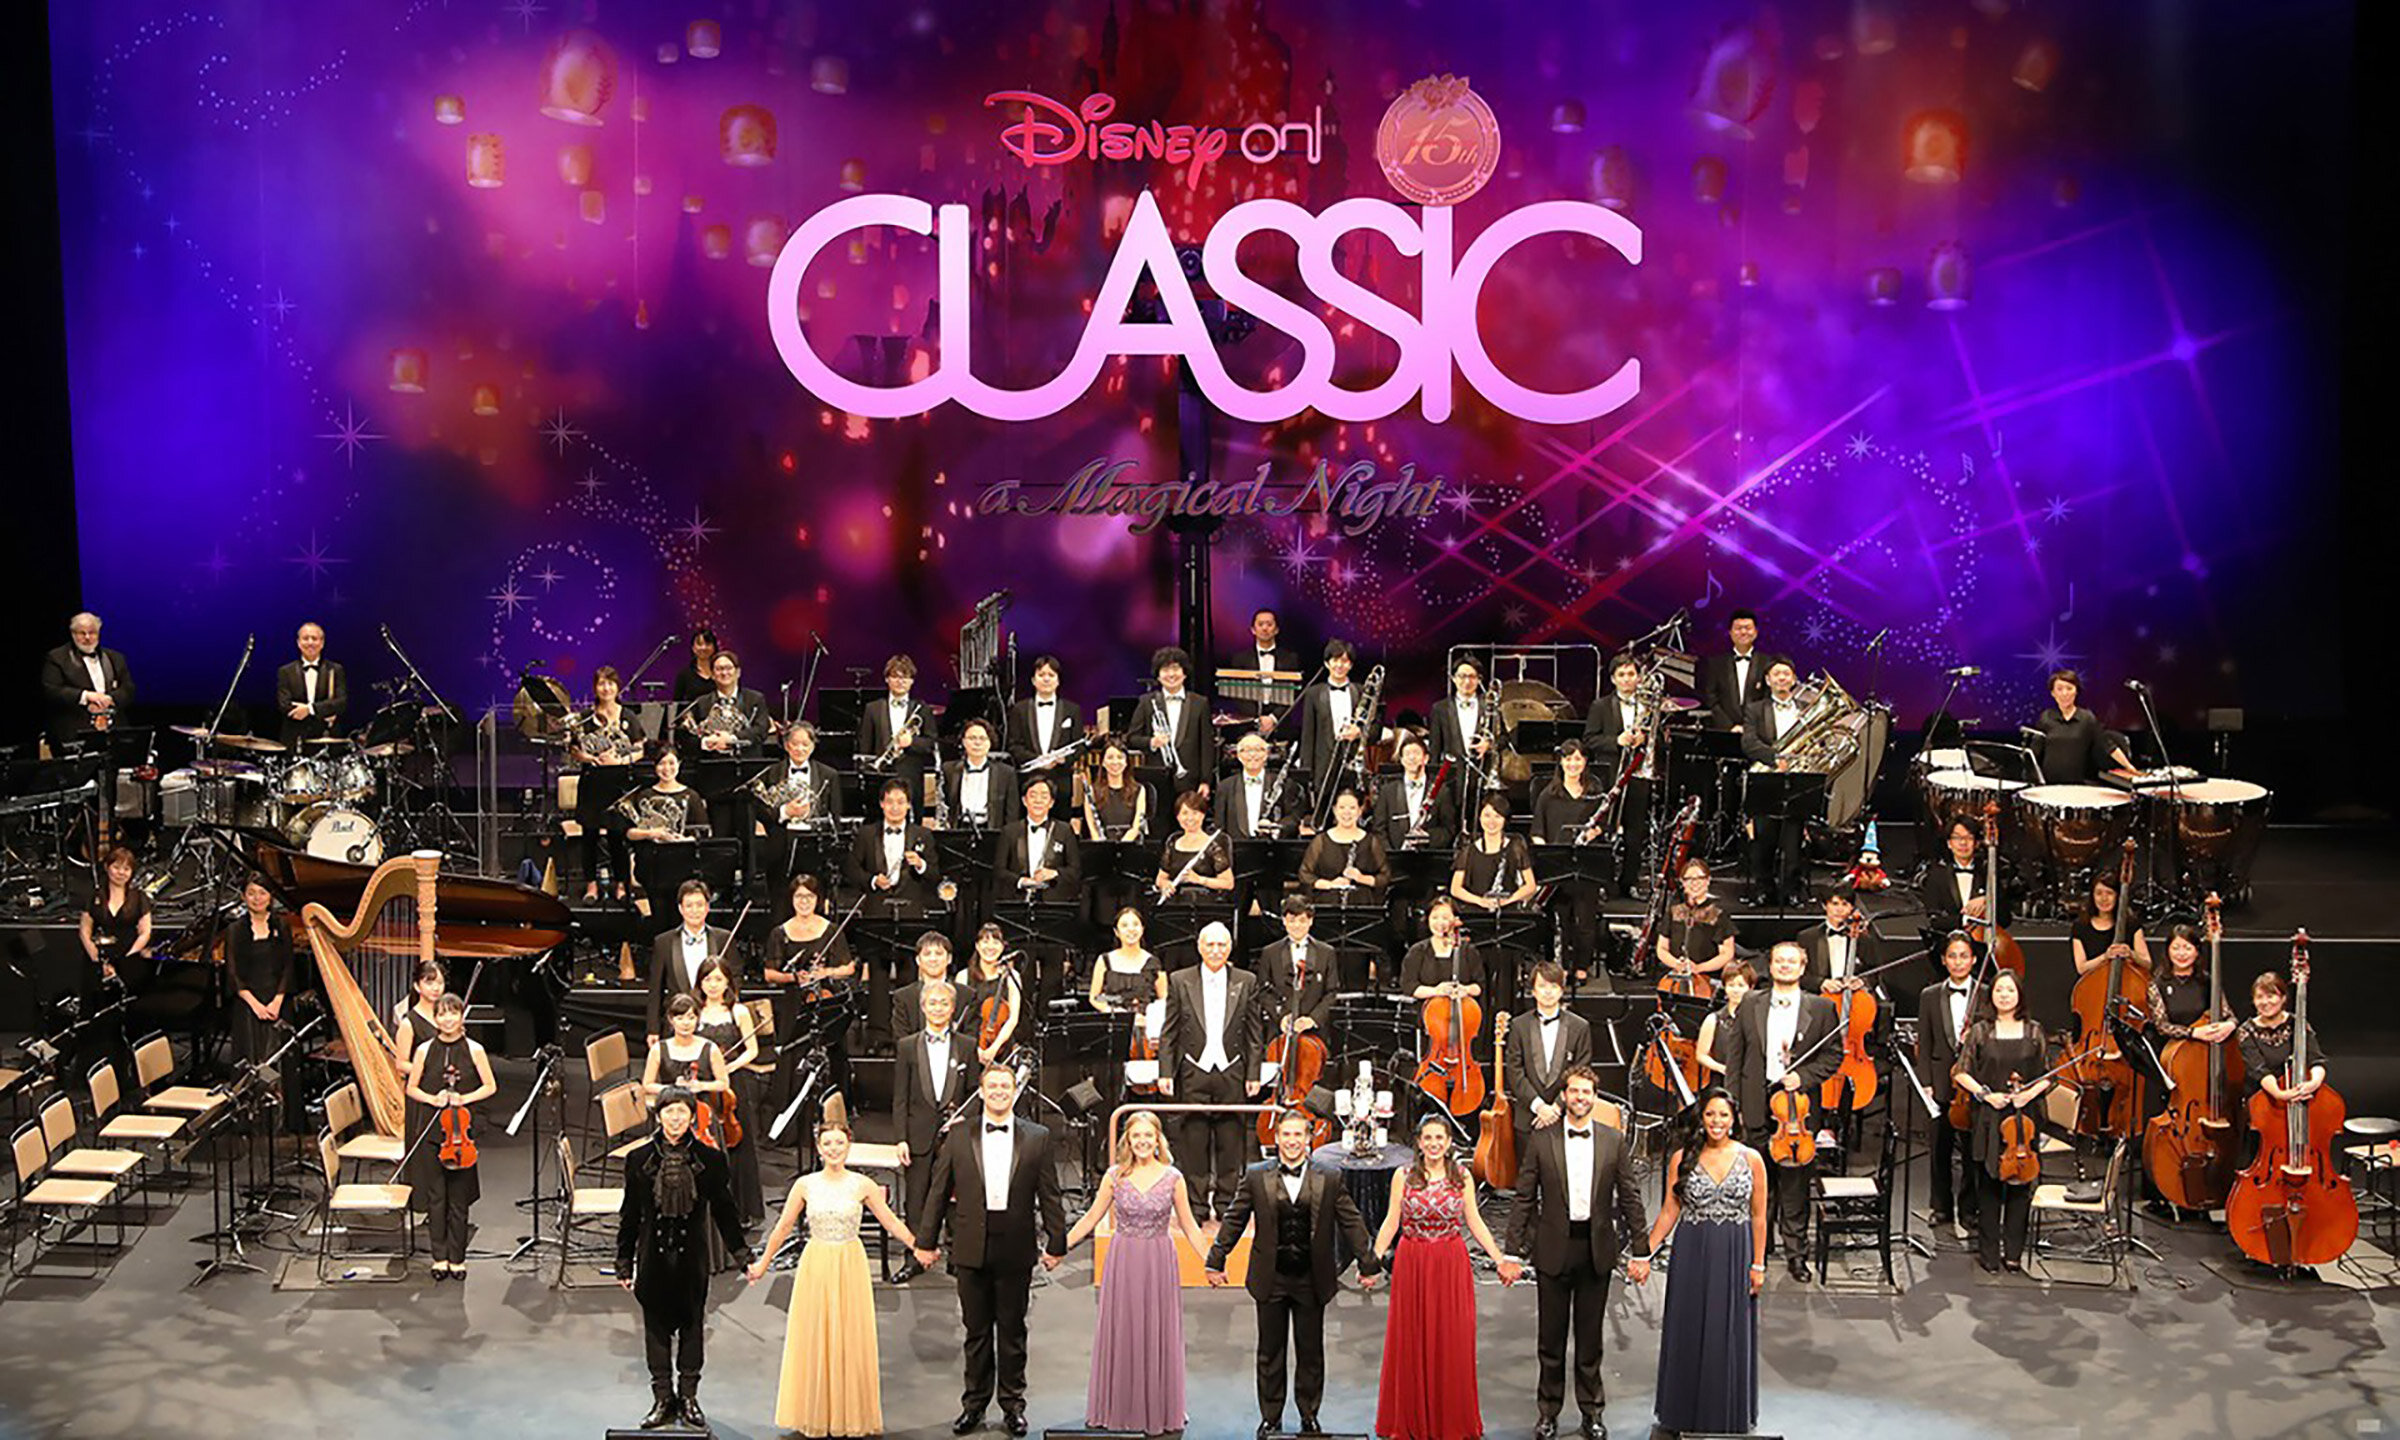 Disney On Classic 15th Anniversary Tour